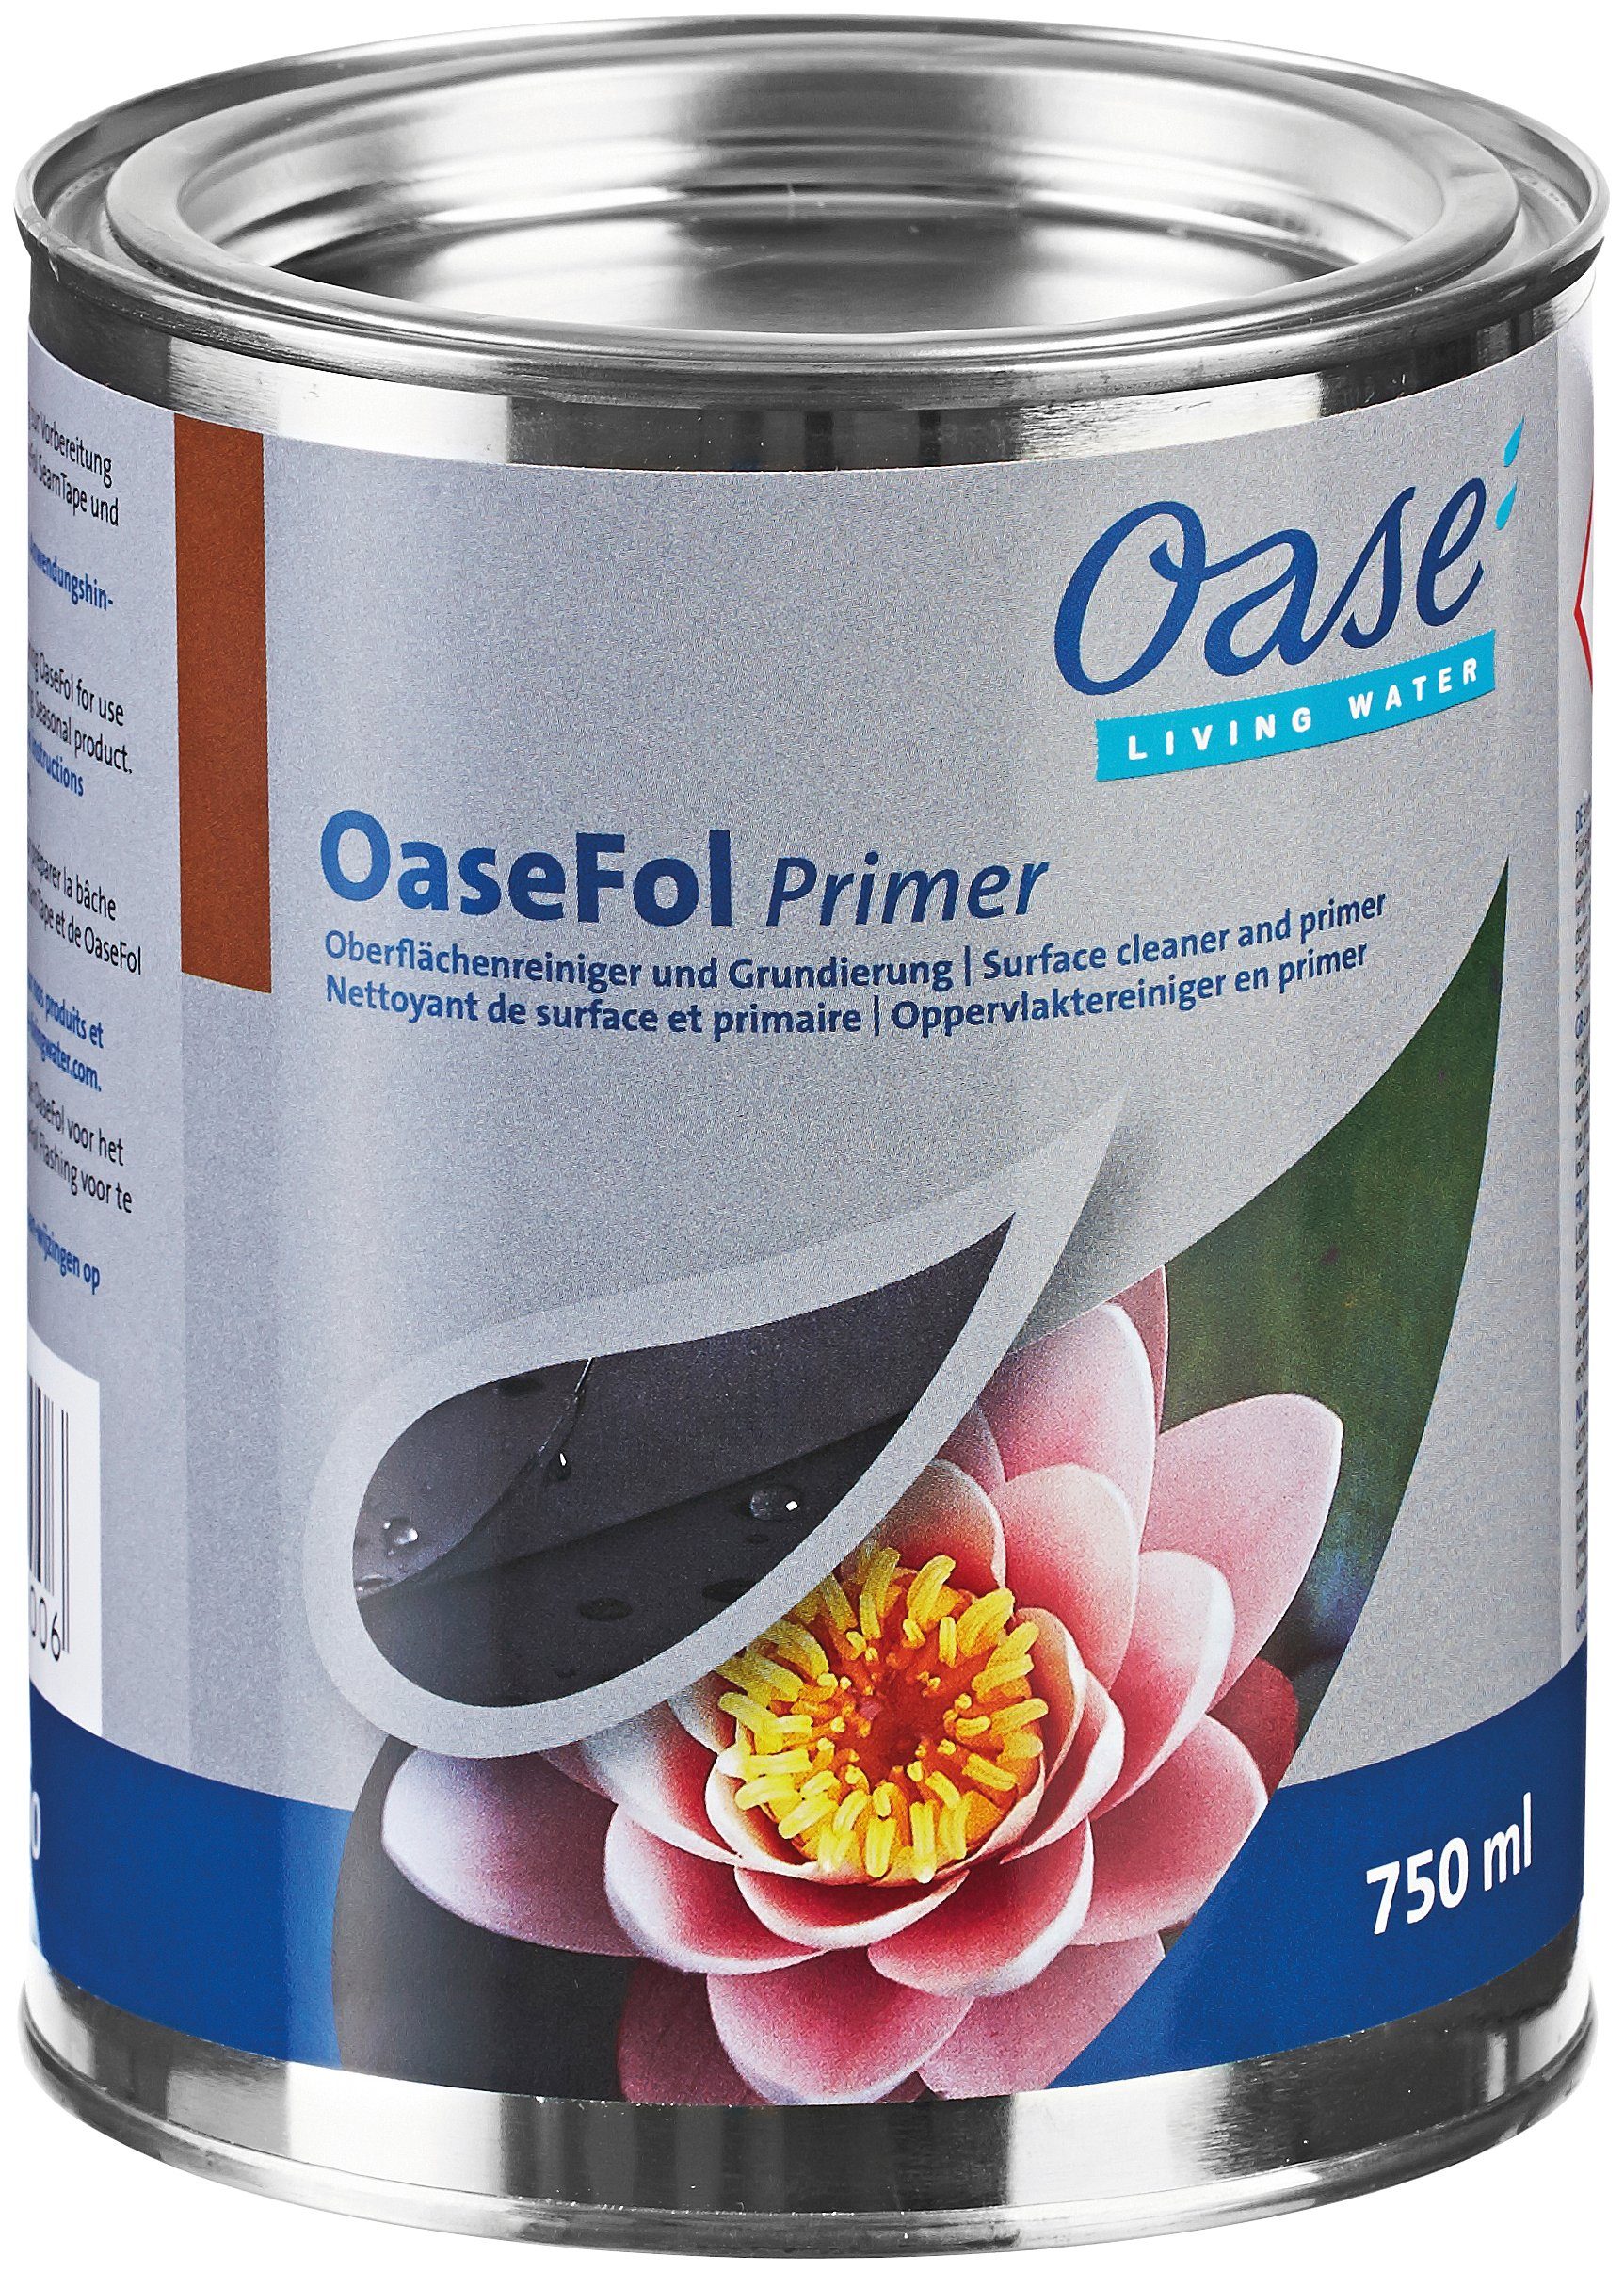 OASE Teichgrundierung OaseFol Primer, 750 ml